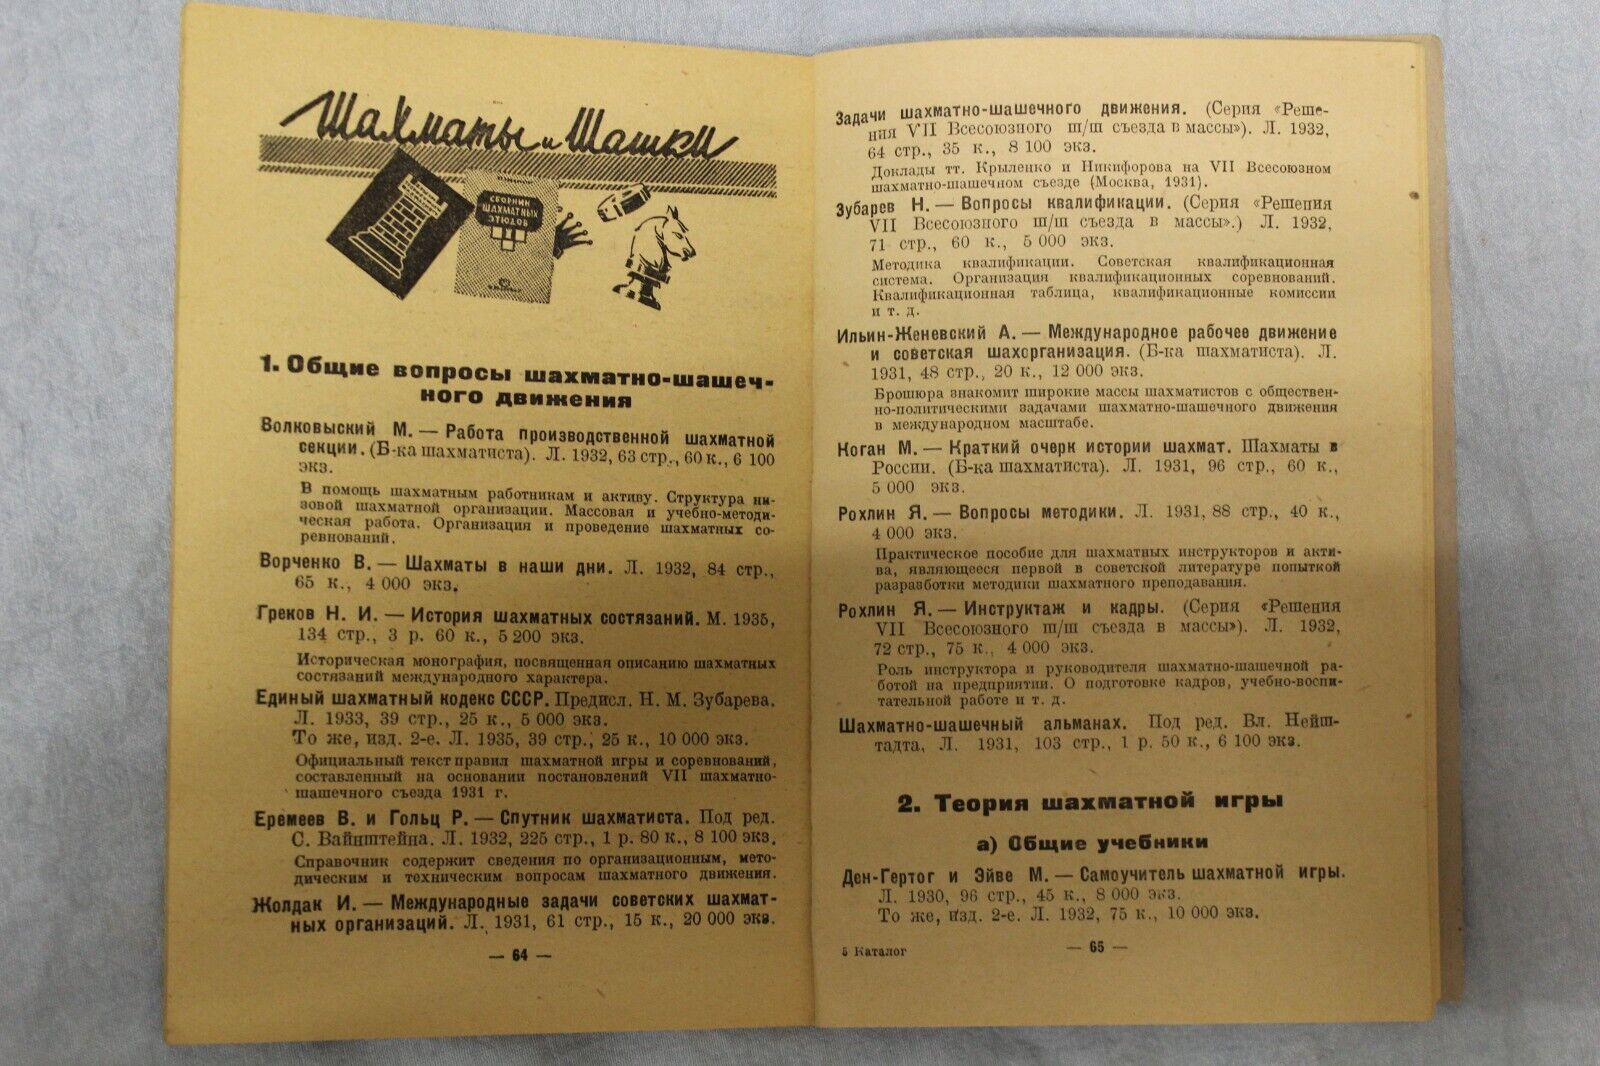 10999.Chess book Baturinsky-Karpov library: Physical Activity, Tourism, Chess, 1928-35